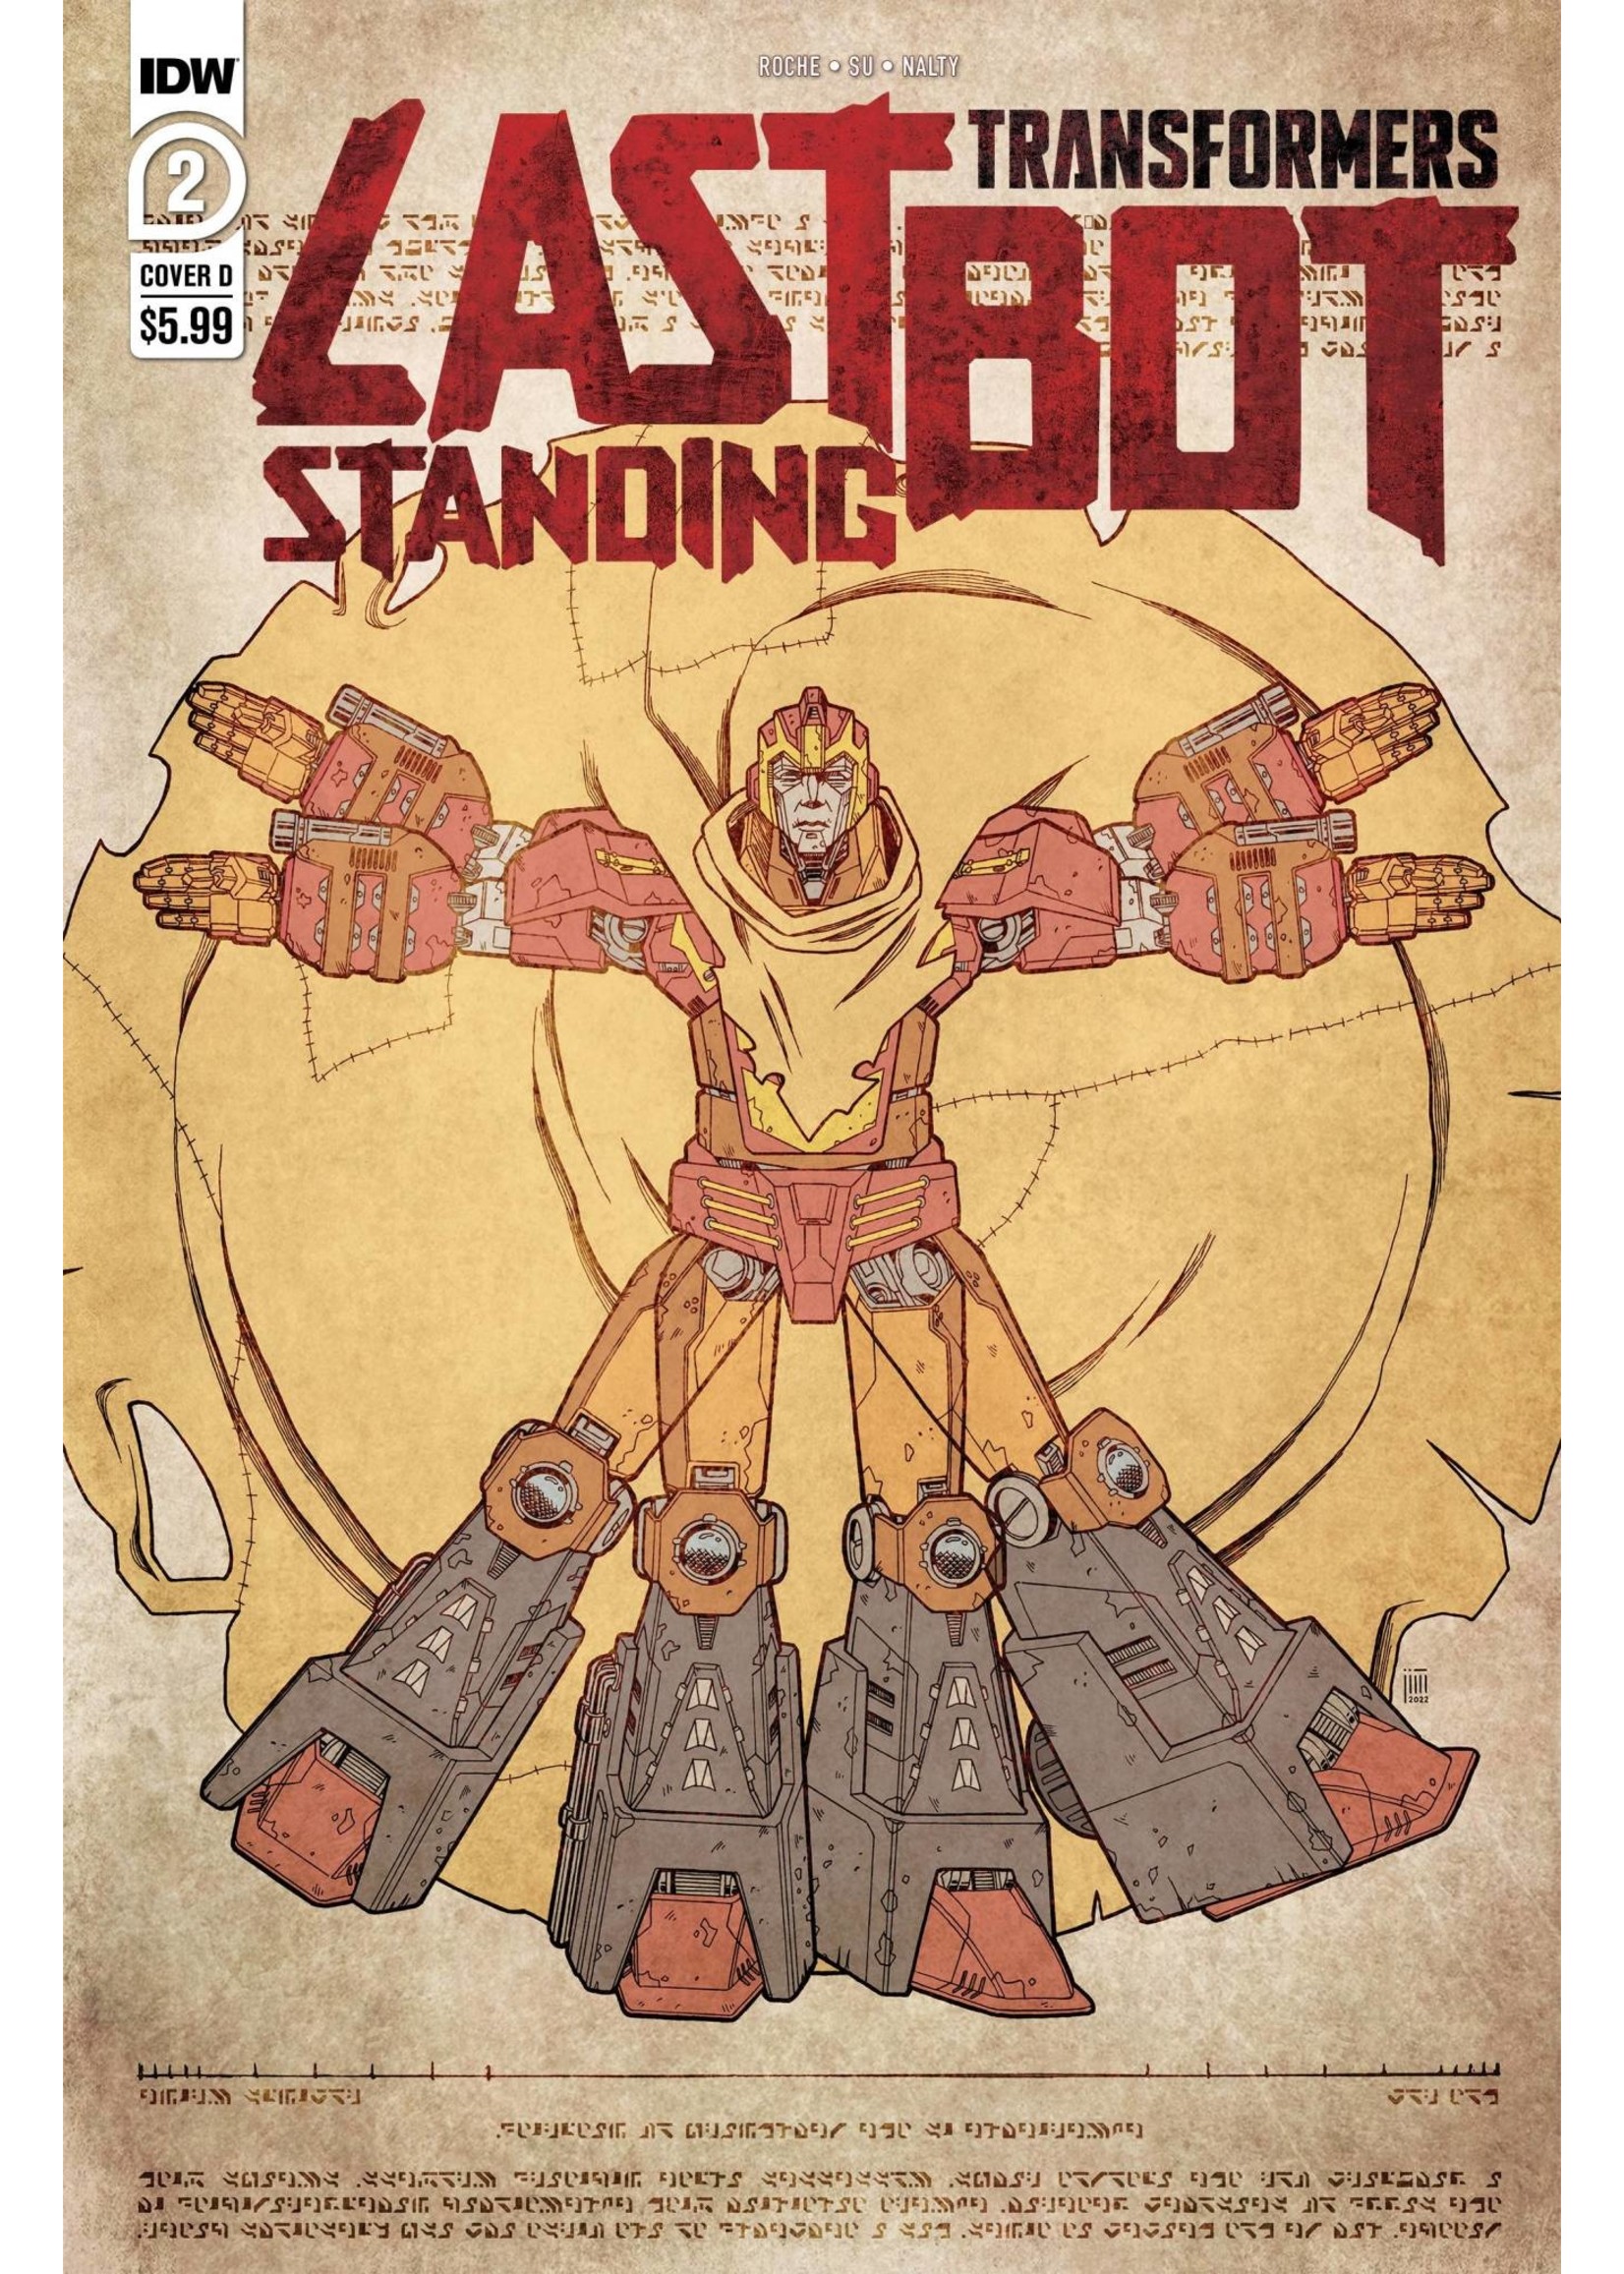 Transformers Transformers: Last Bot Standing #2